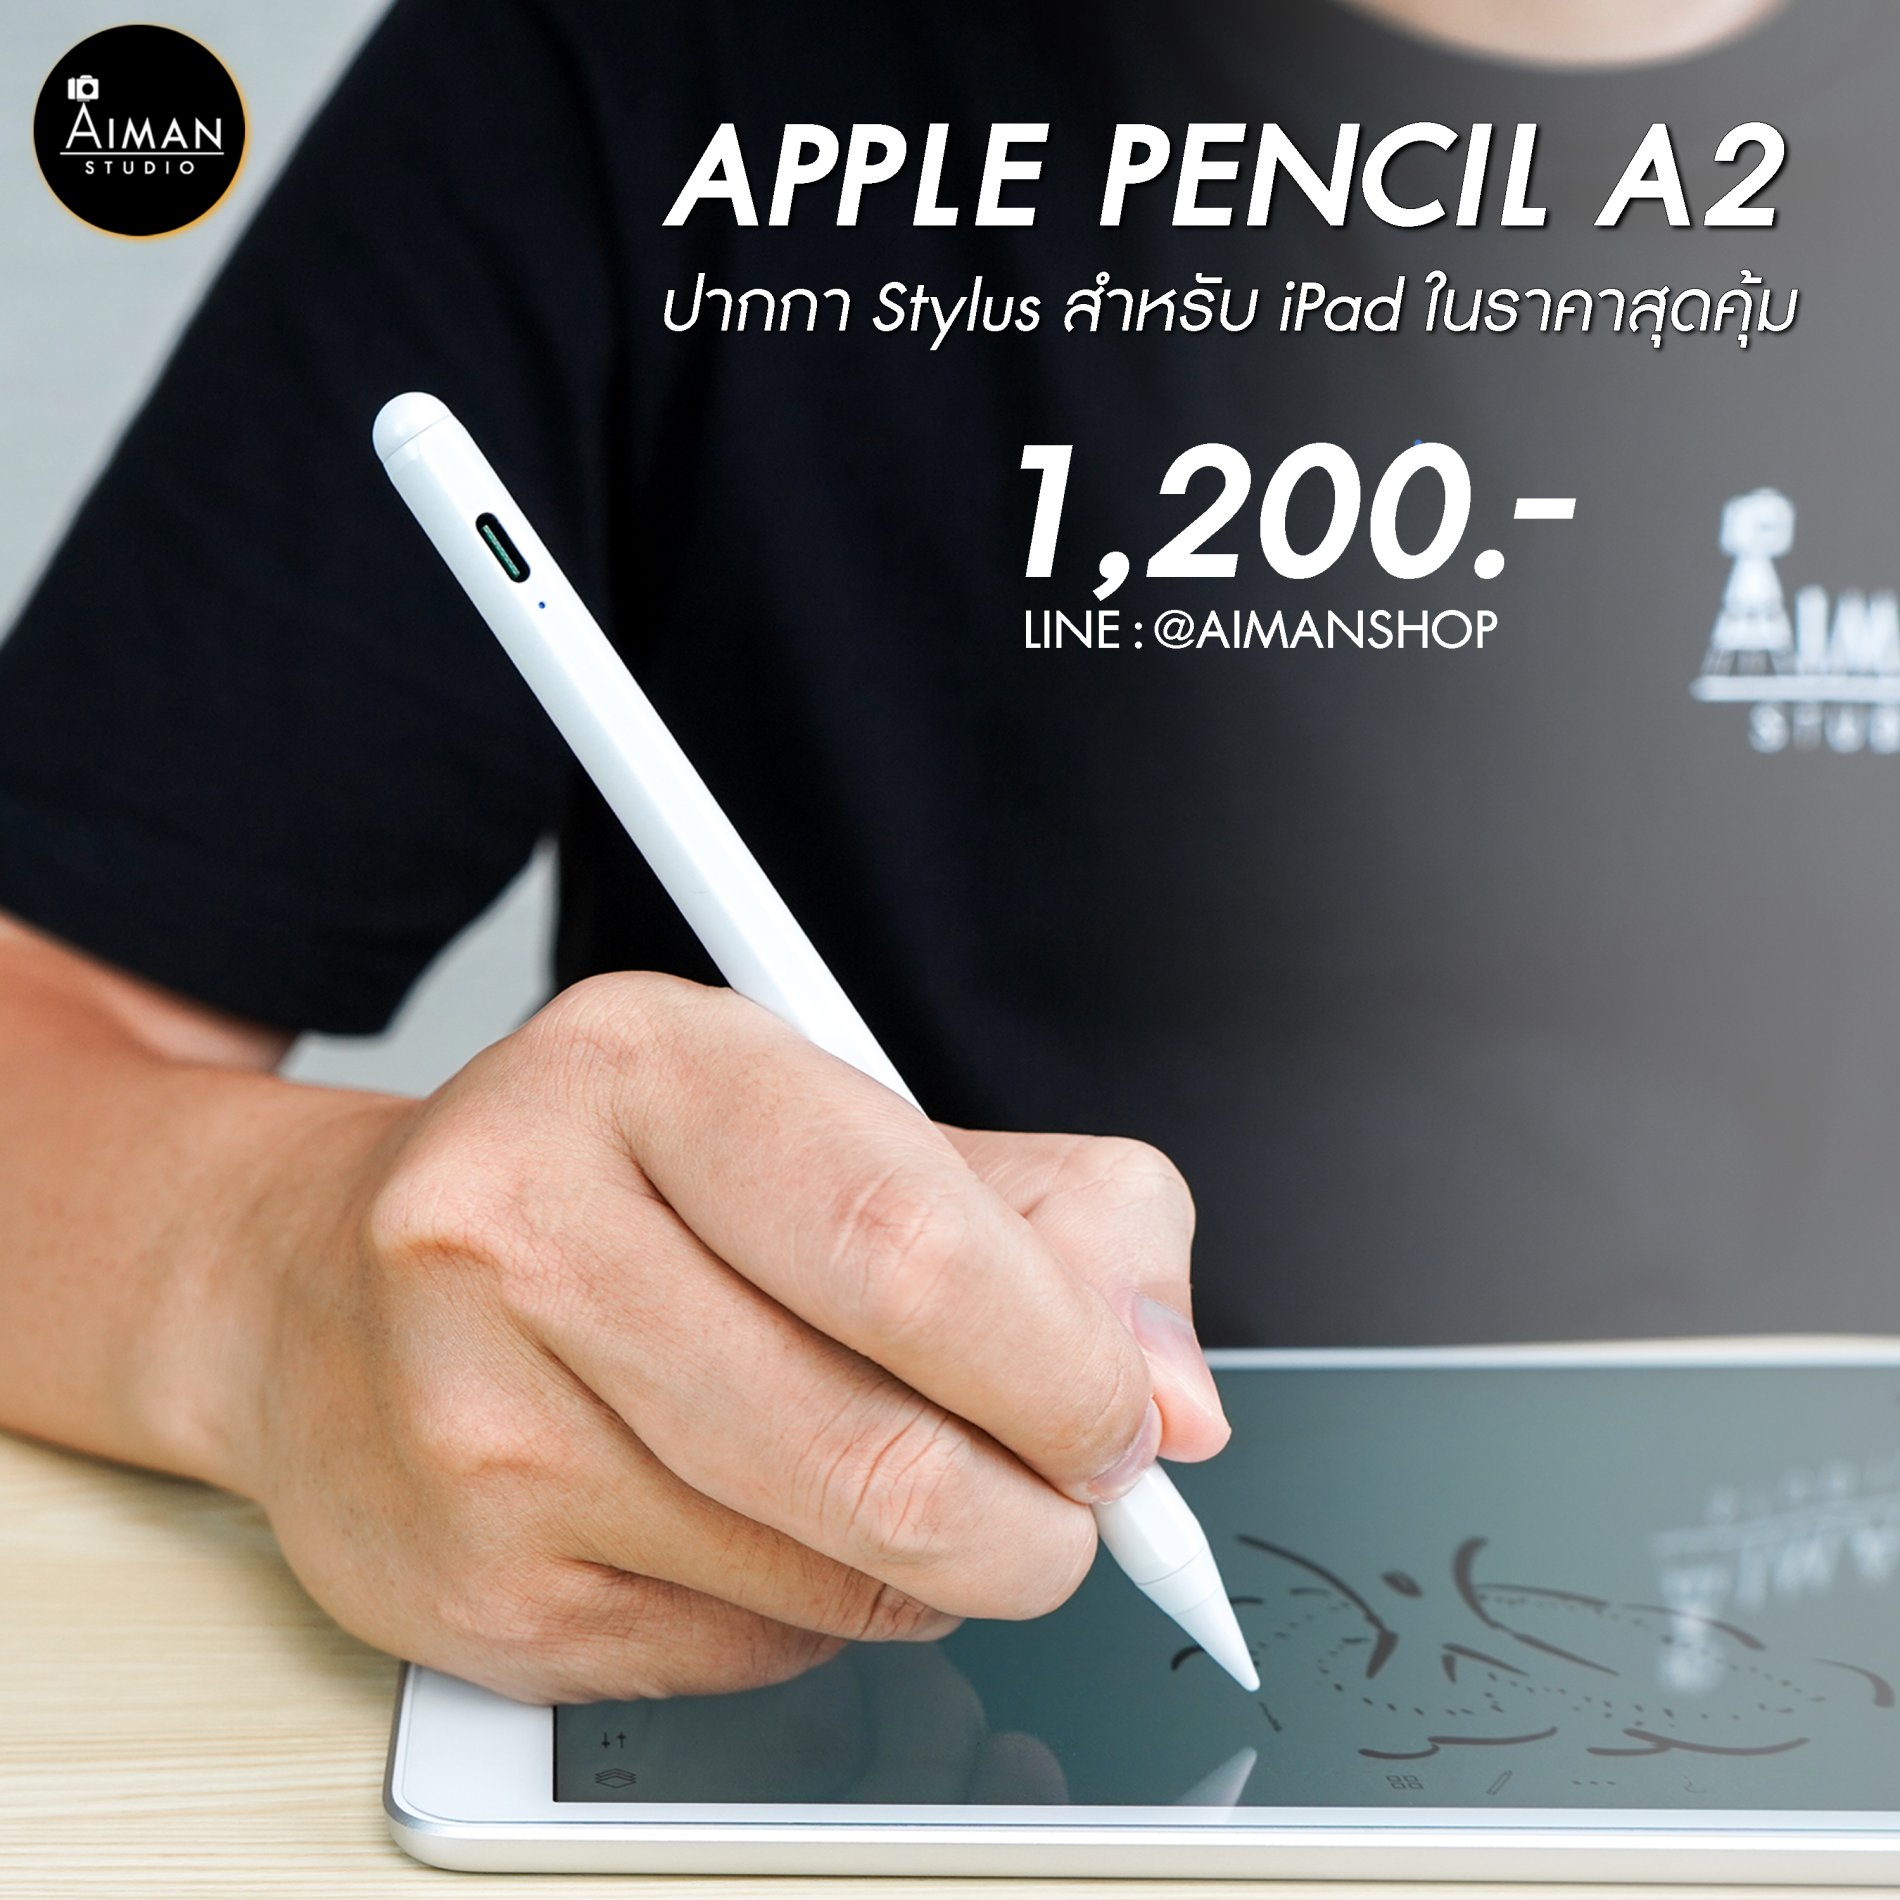 Apple Pencil A2